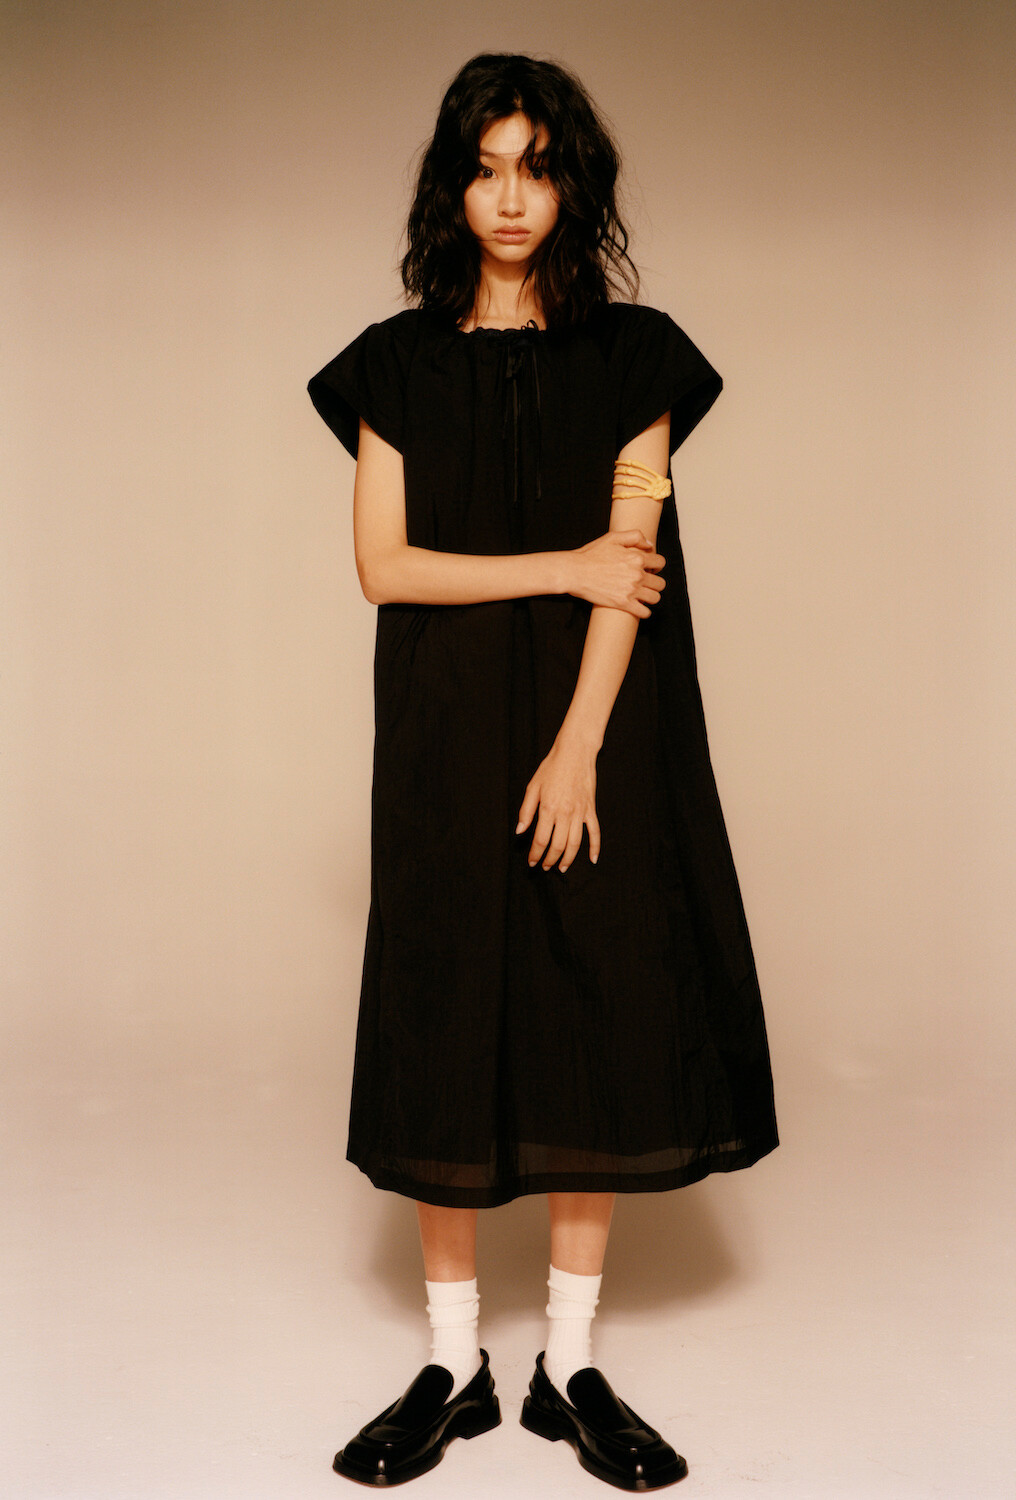 Jung Ho Yeon - Page 5 - Female Fashion Models - Bellazon